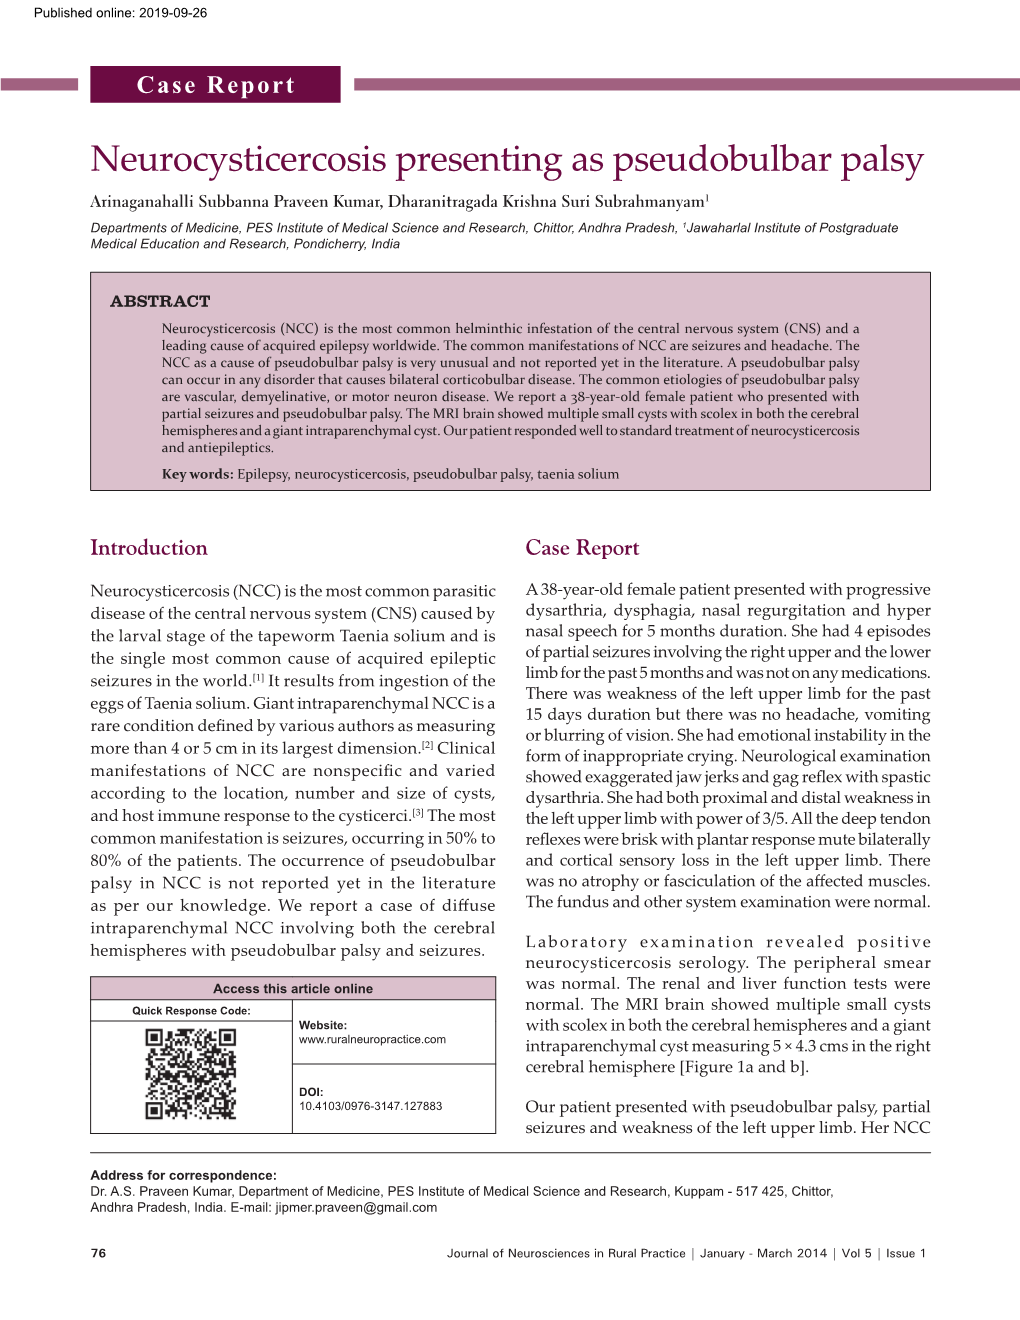 Neurocysticercosis Presenting As Pseudobulbar Palsy